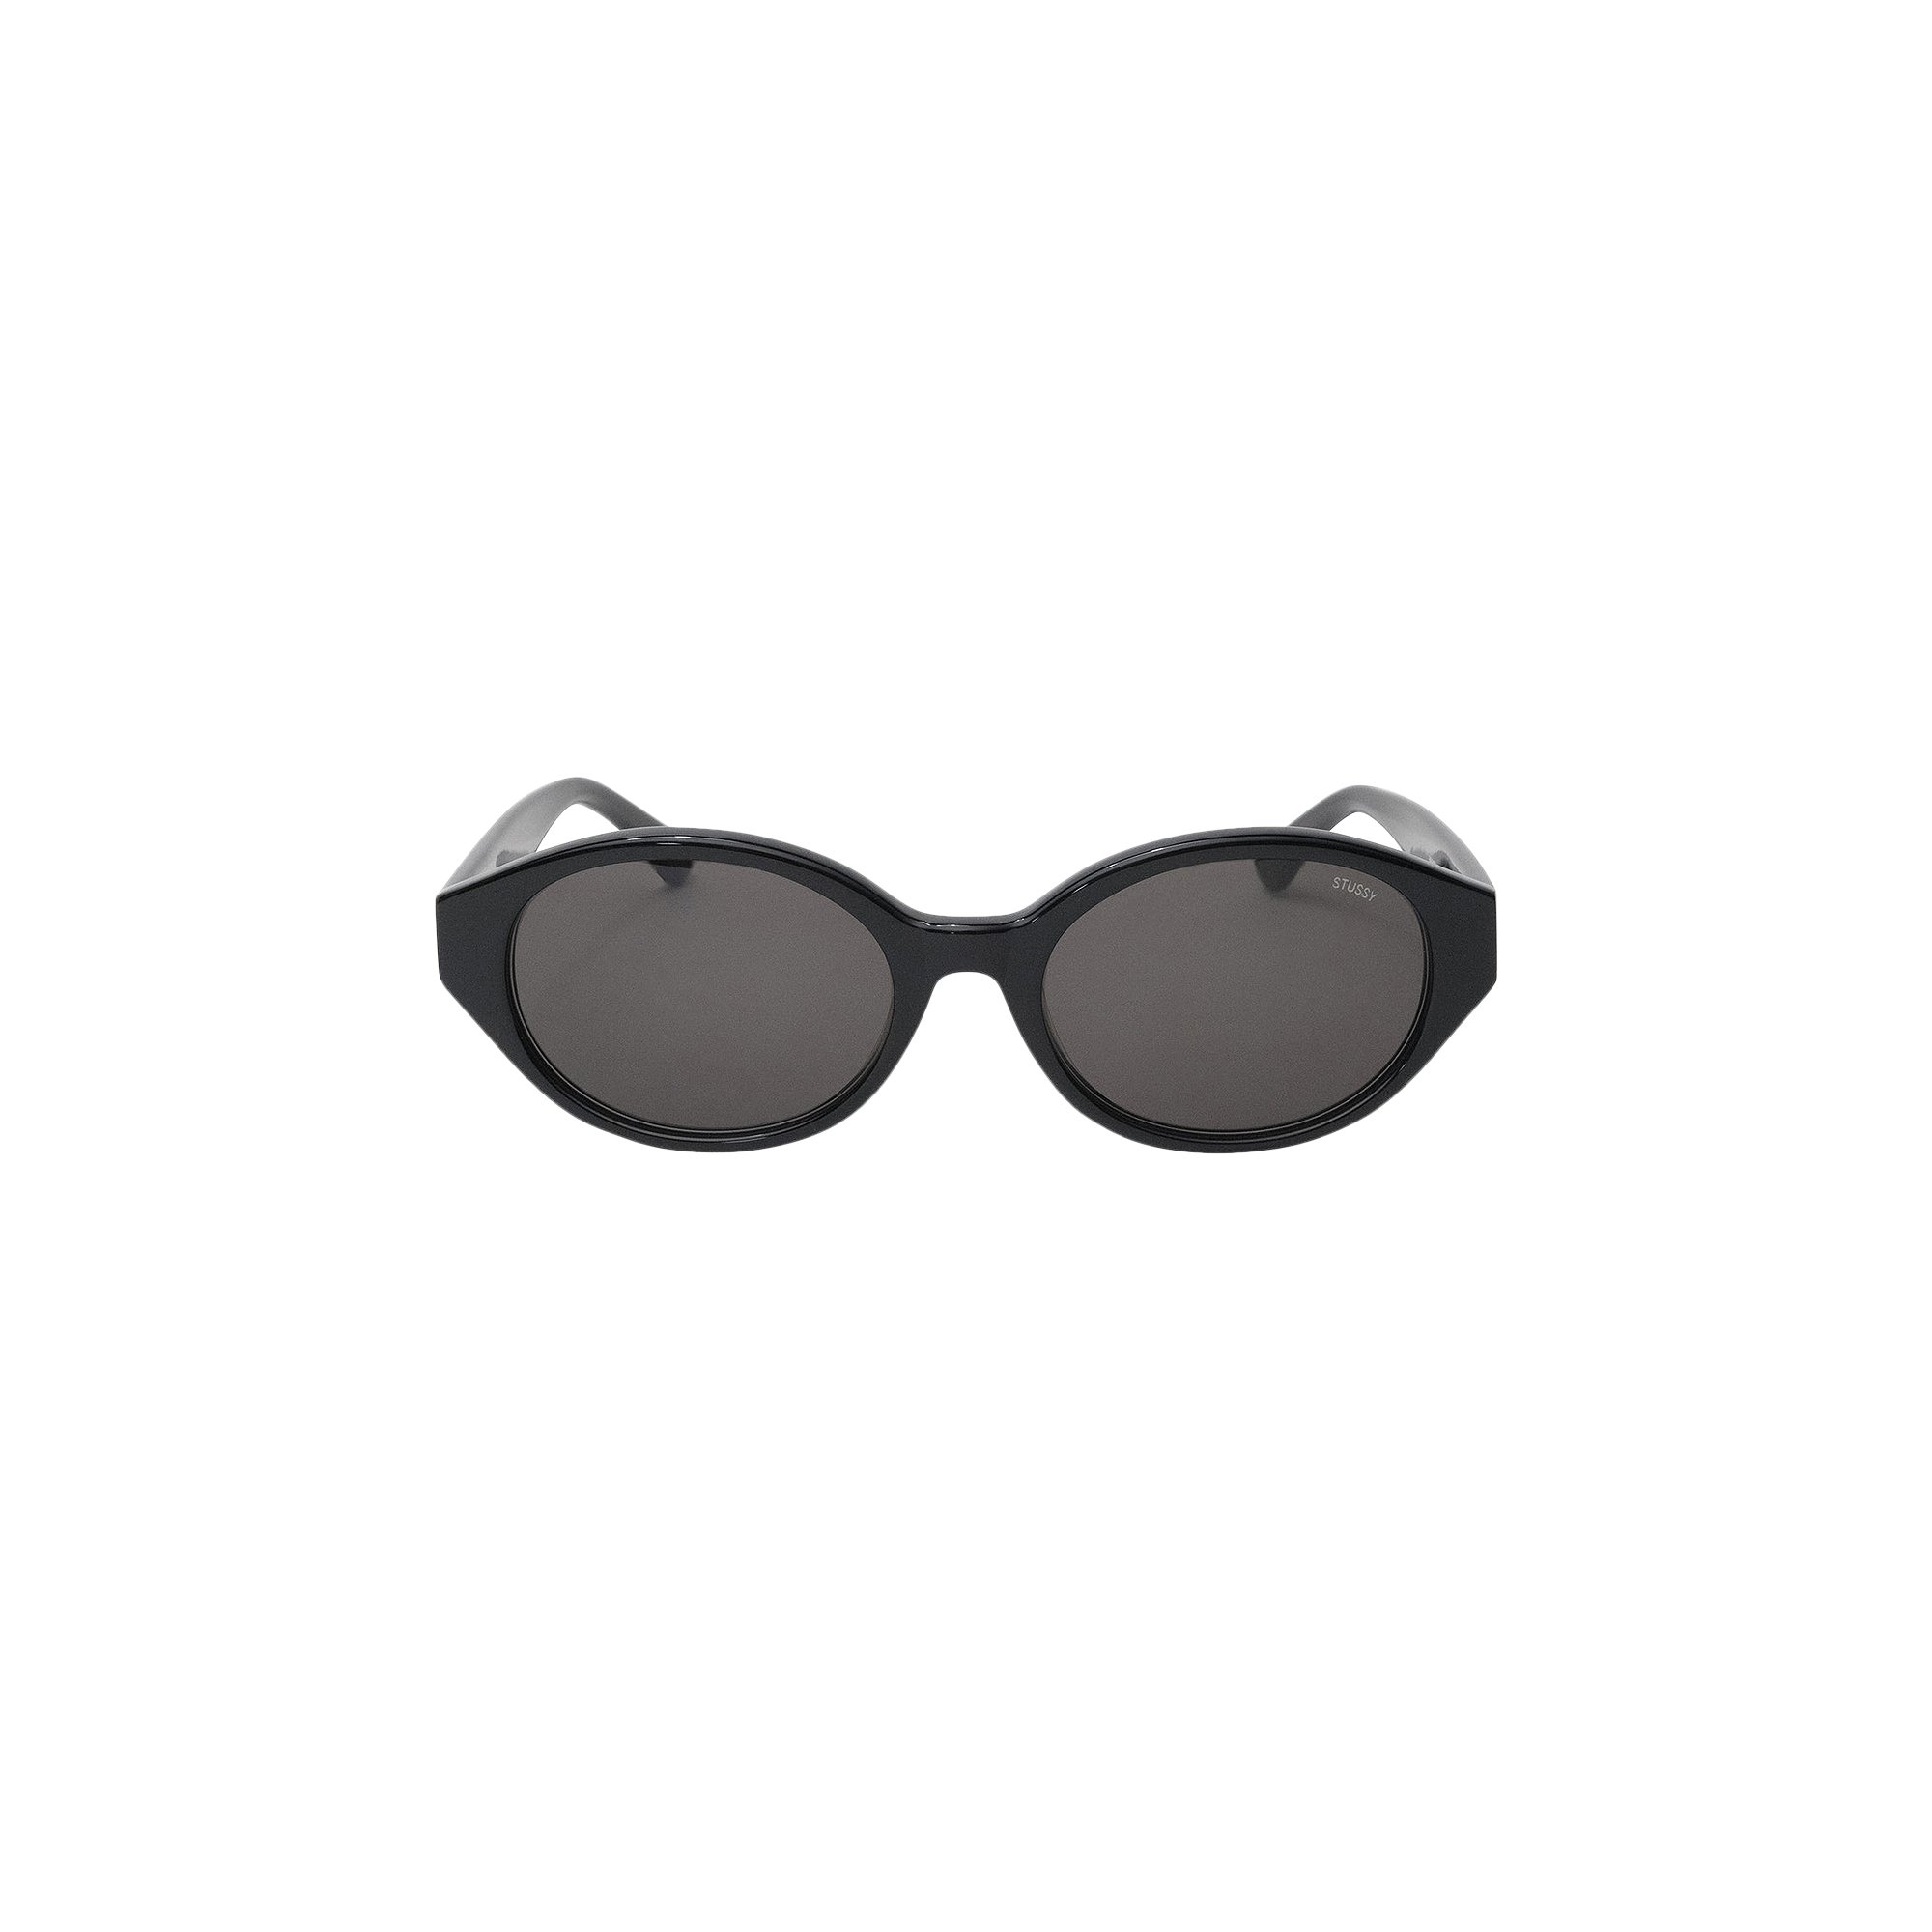 Buy Stussy Penn Sunglasses 'Black' - 338209 BLAC | GOAT